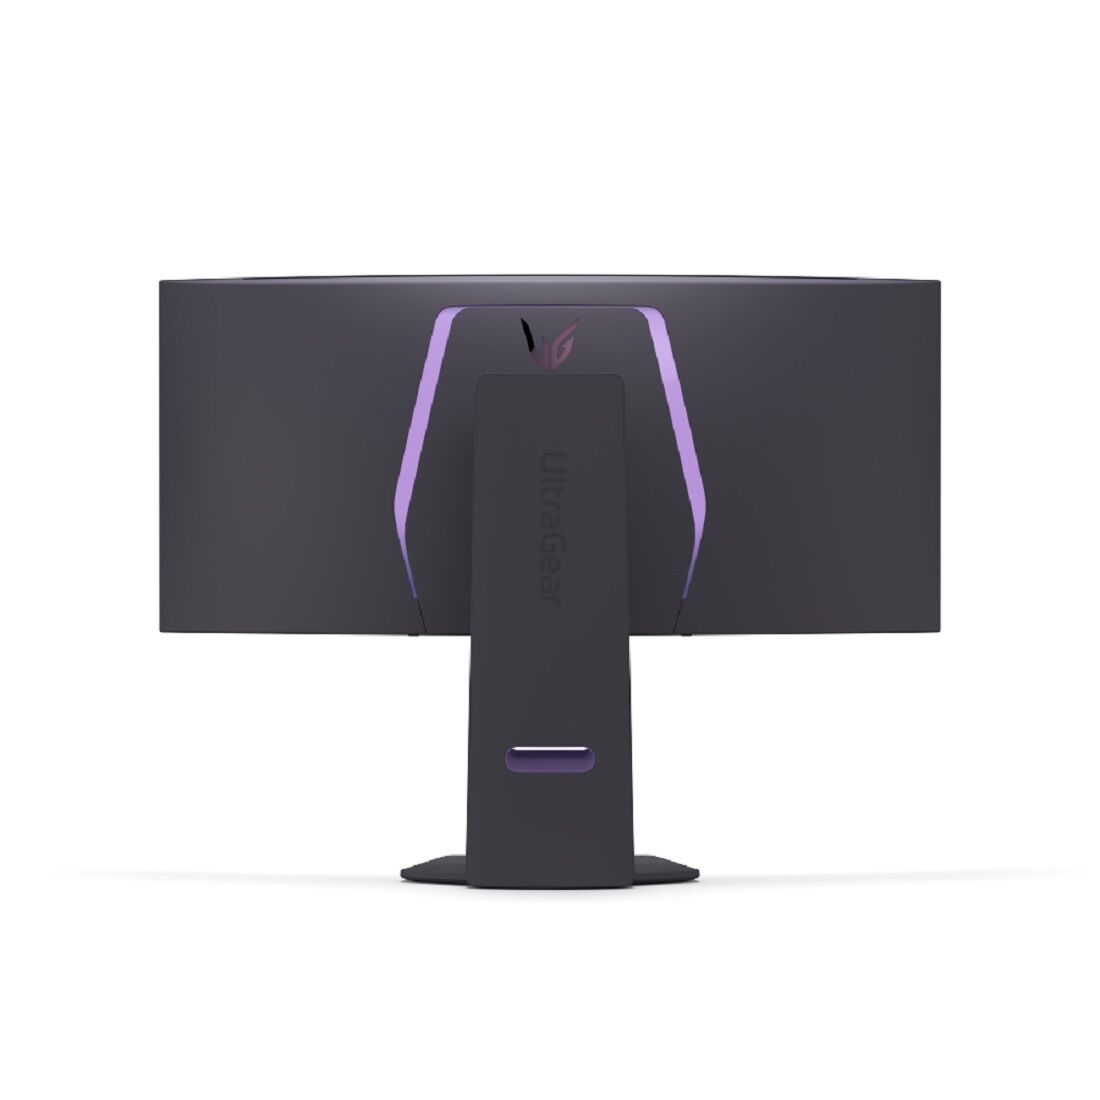 LG prezentuje nowe monitory gamingowe - UltraGear OLED 2